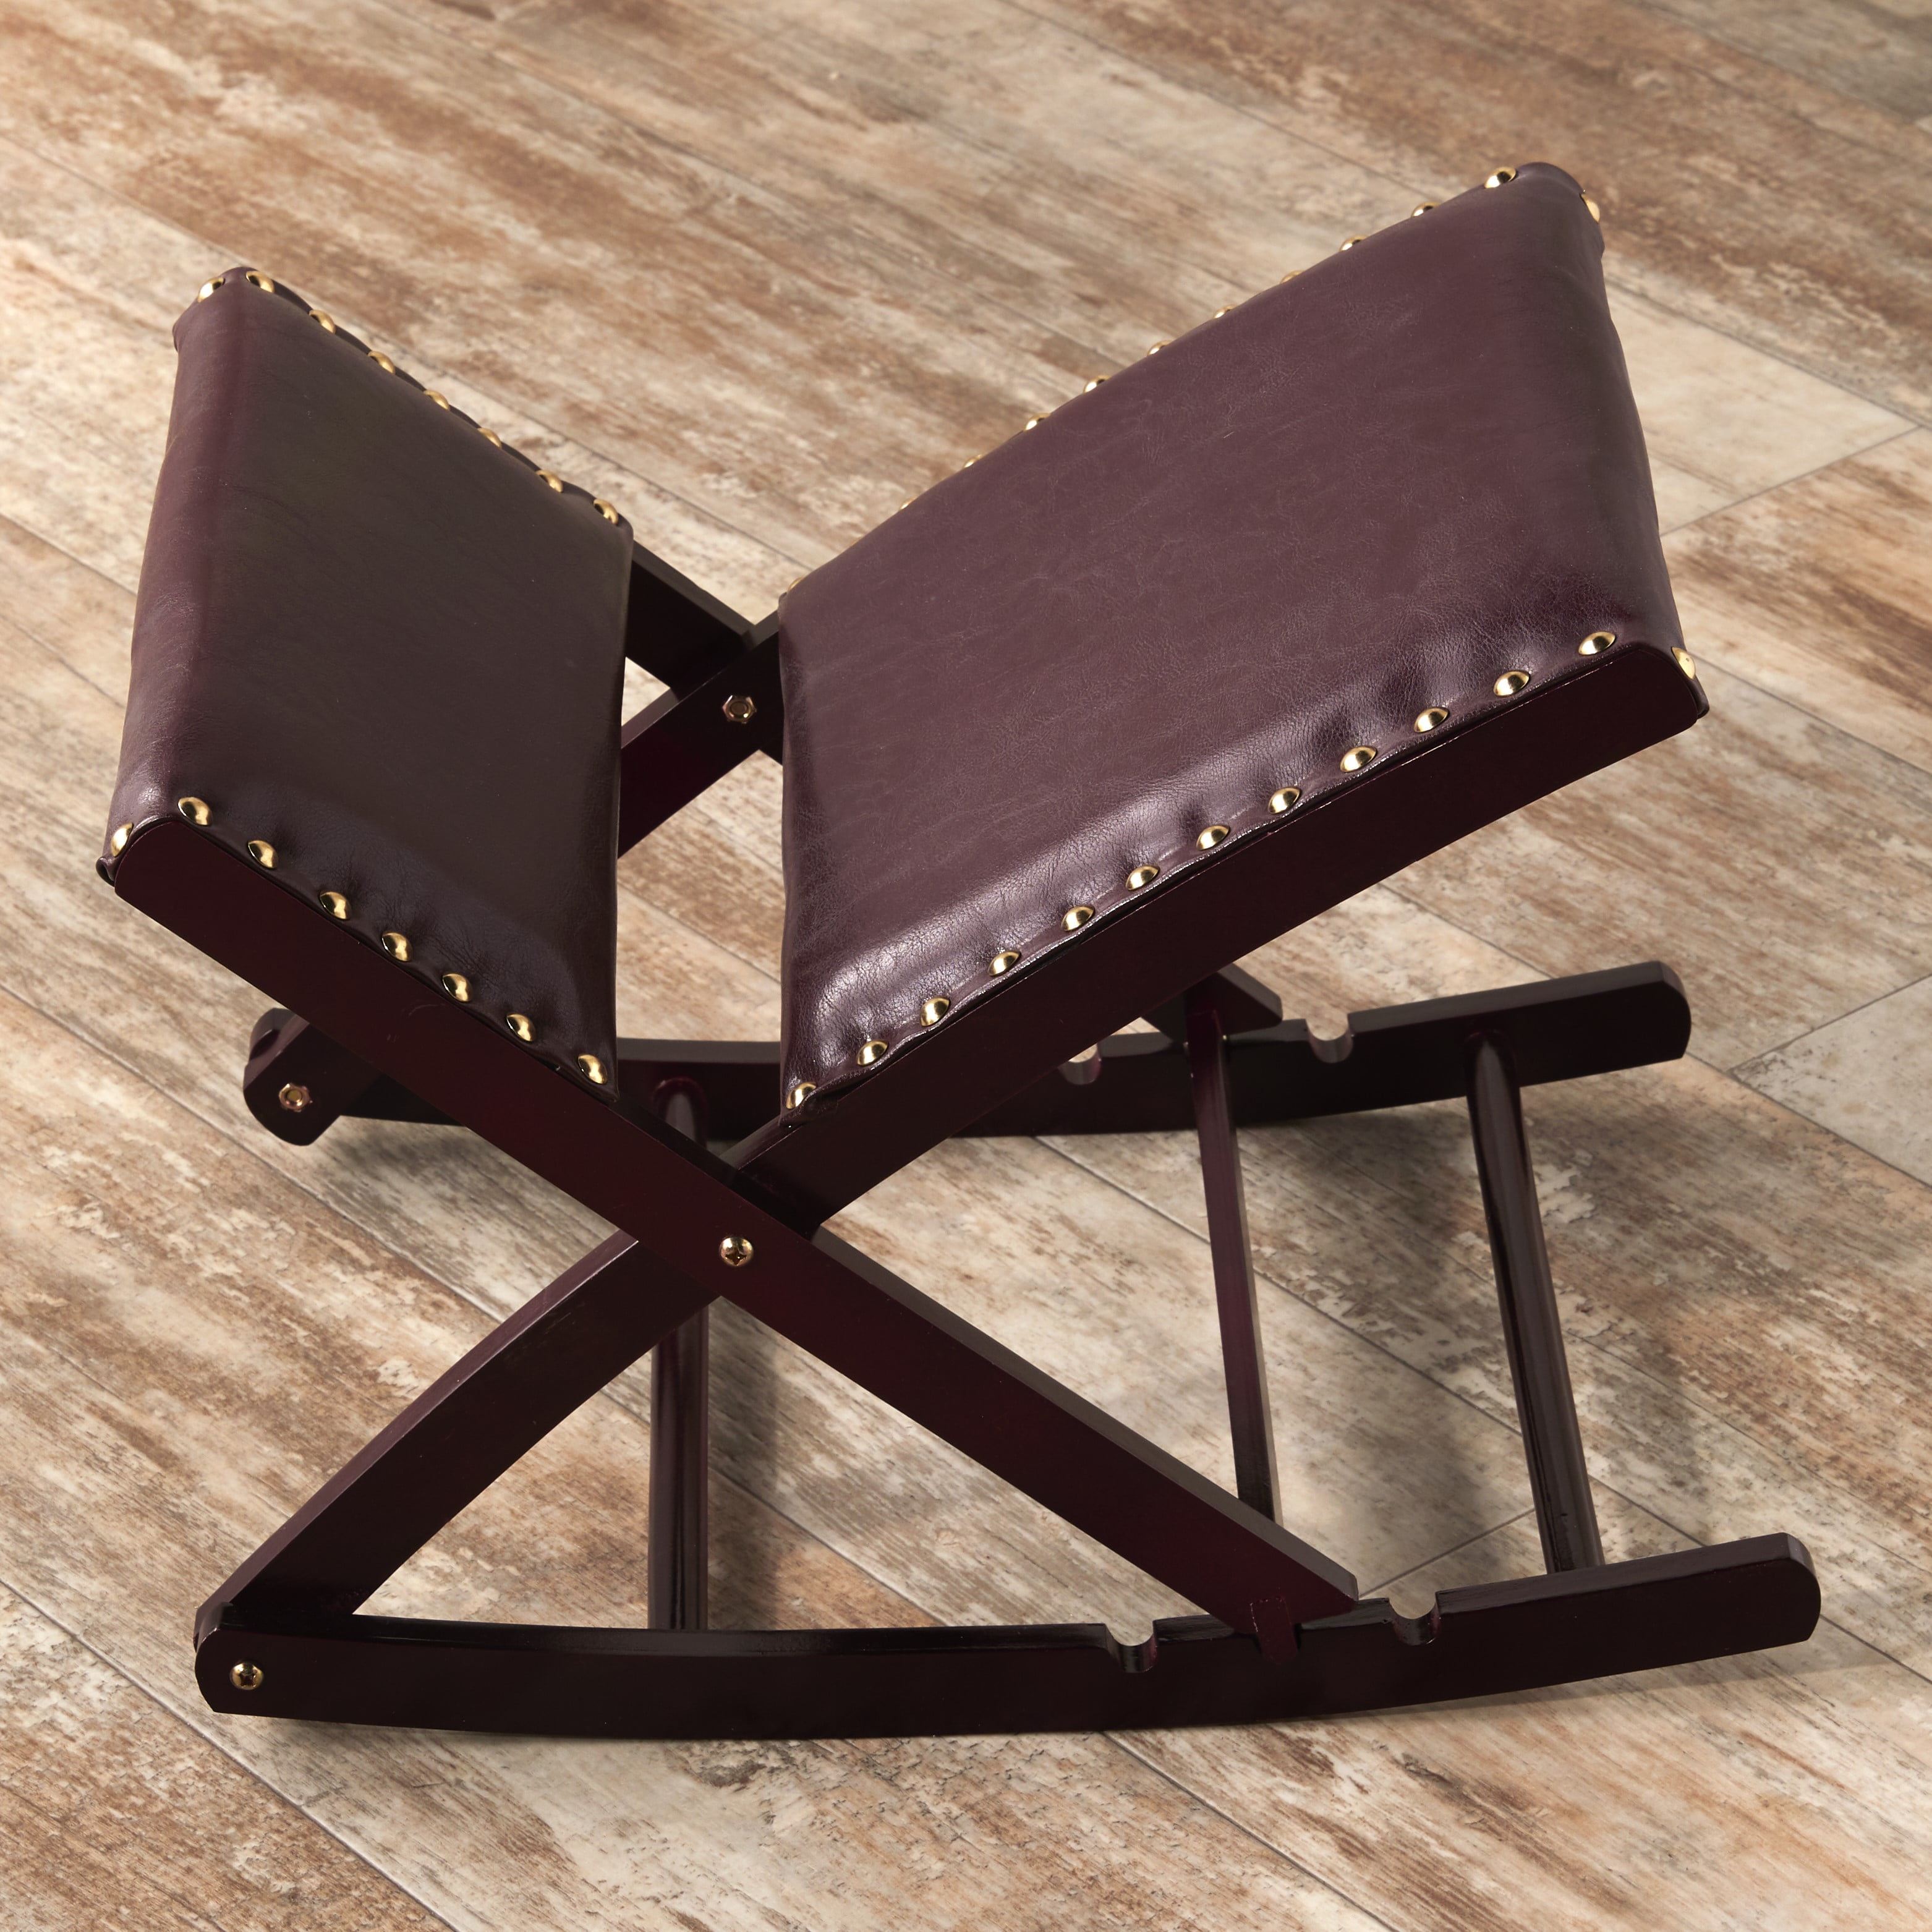 Adjustable Upholstered Foot Rest Ottoman – Folds for Storage - Brown 